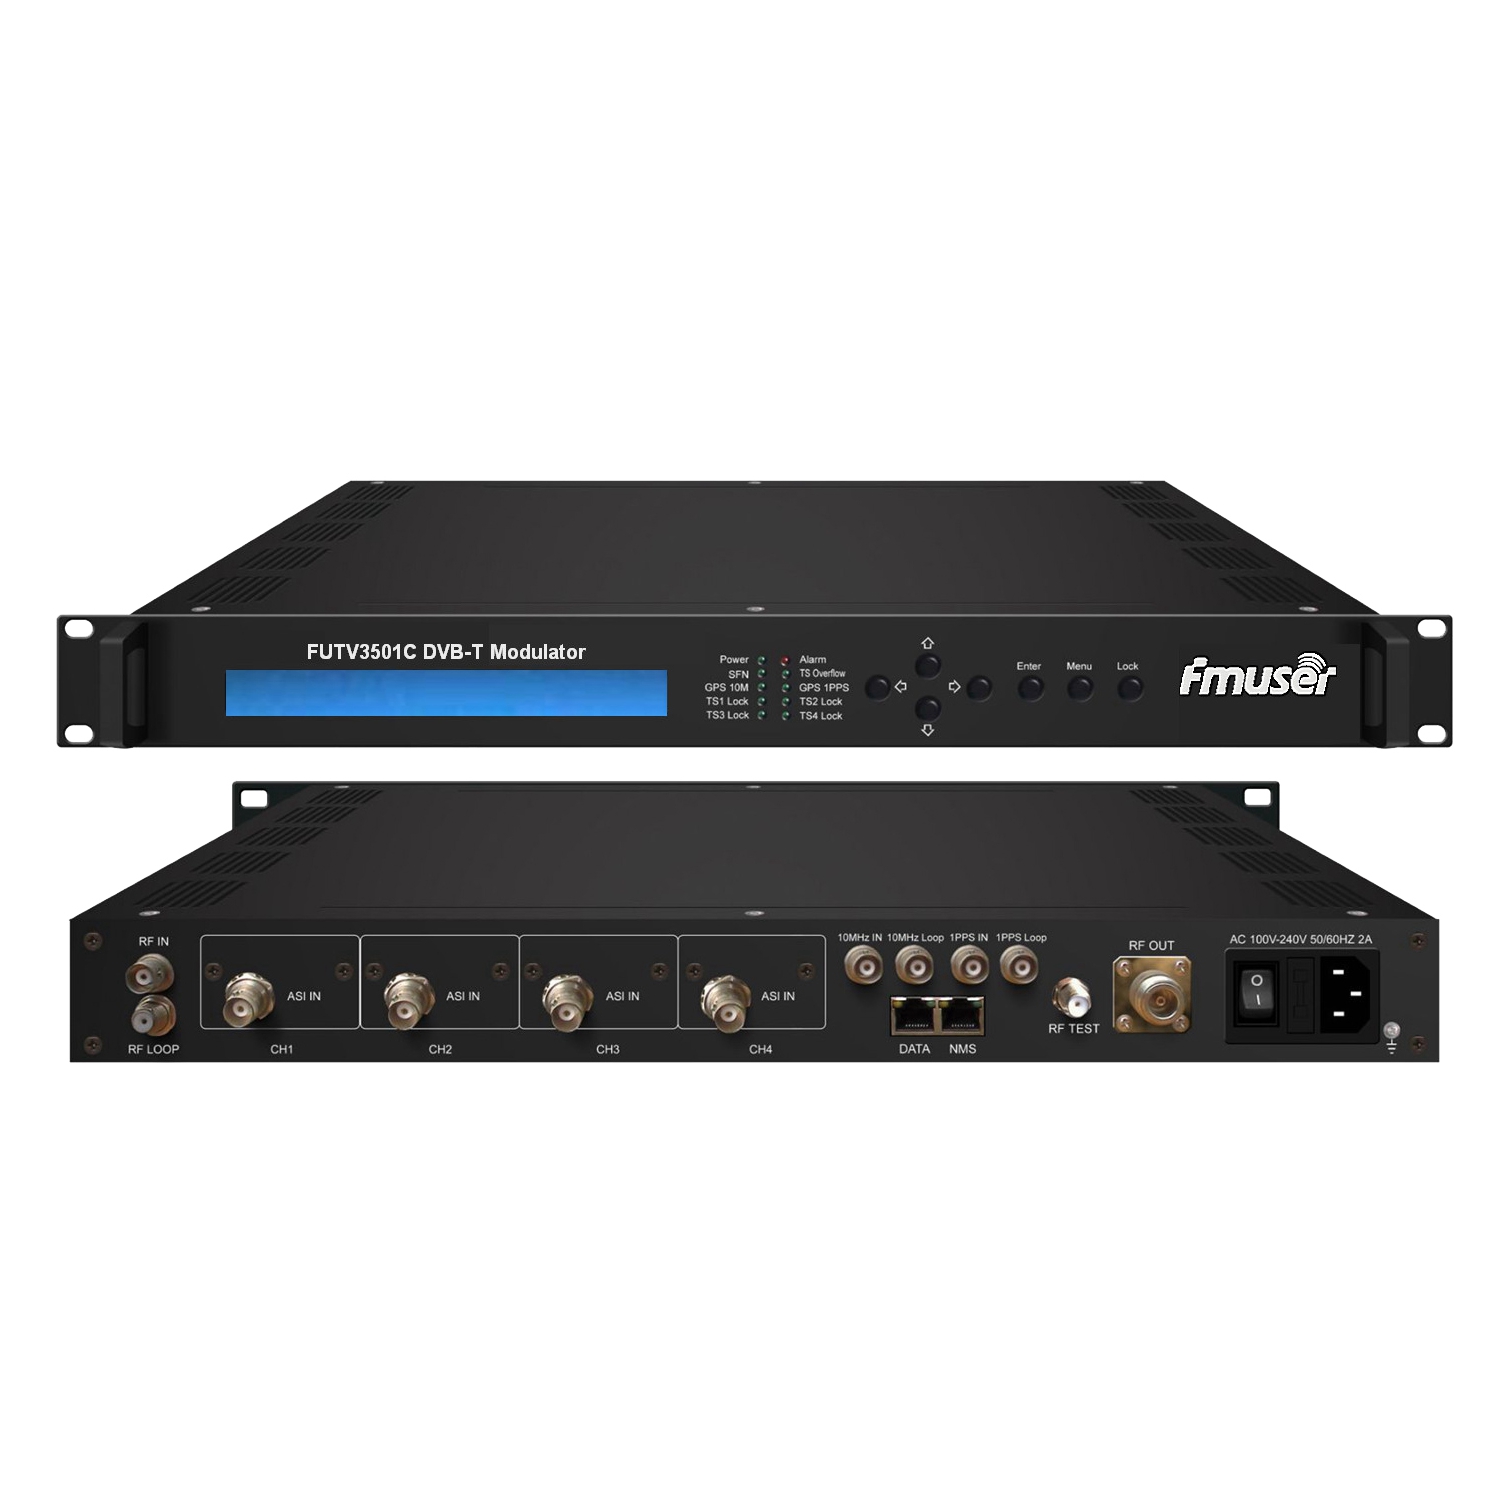 FMUSER FUTV3501C DVB-T модулятор (4 * ASI в, 1 * RF DPD вне, DVB-T стандарт) с дистанционным управлением